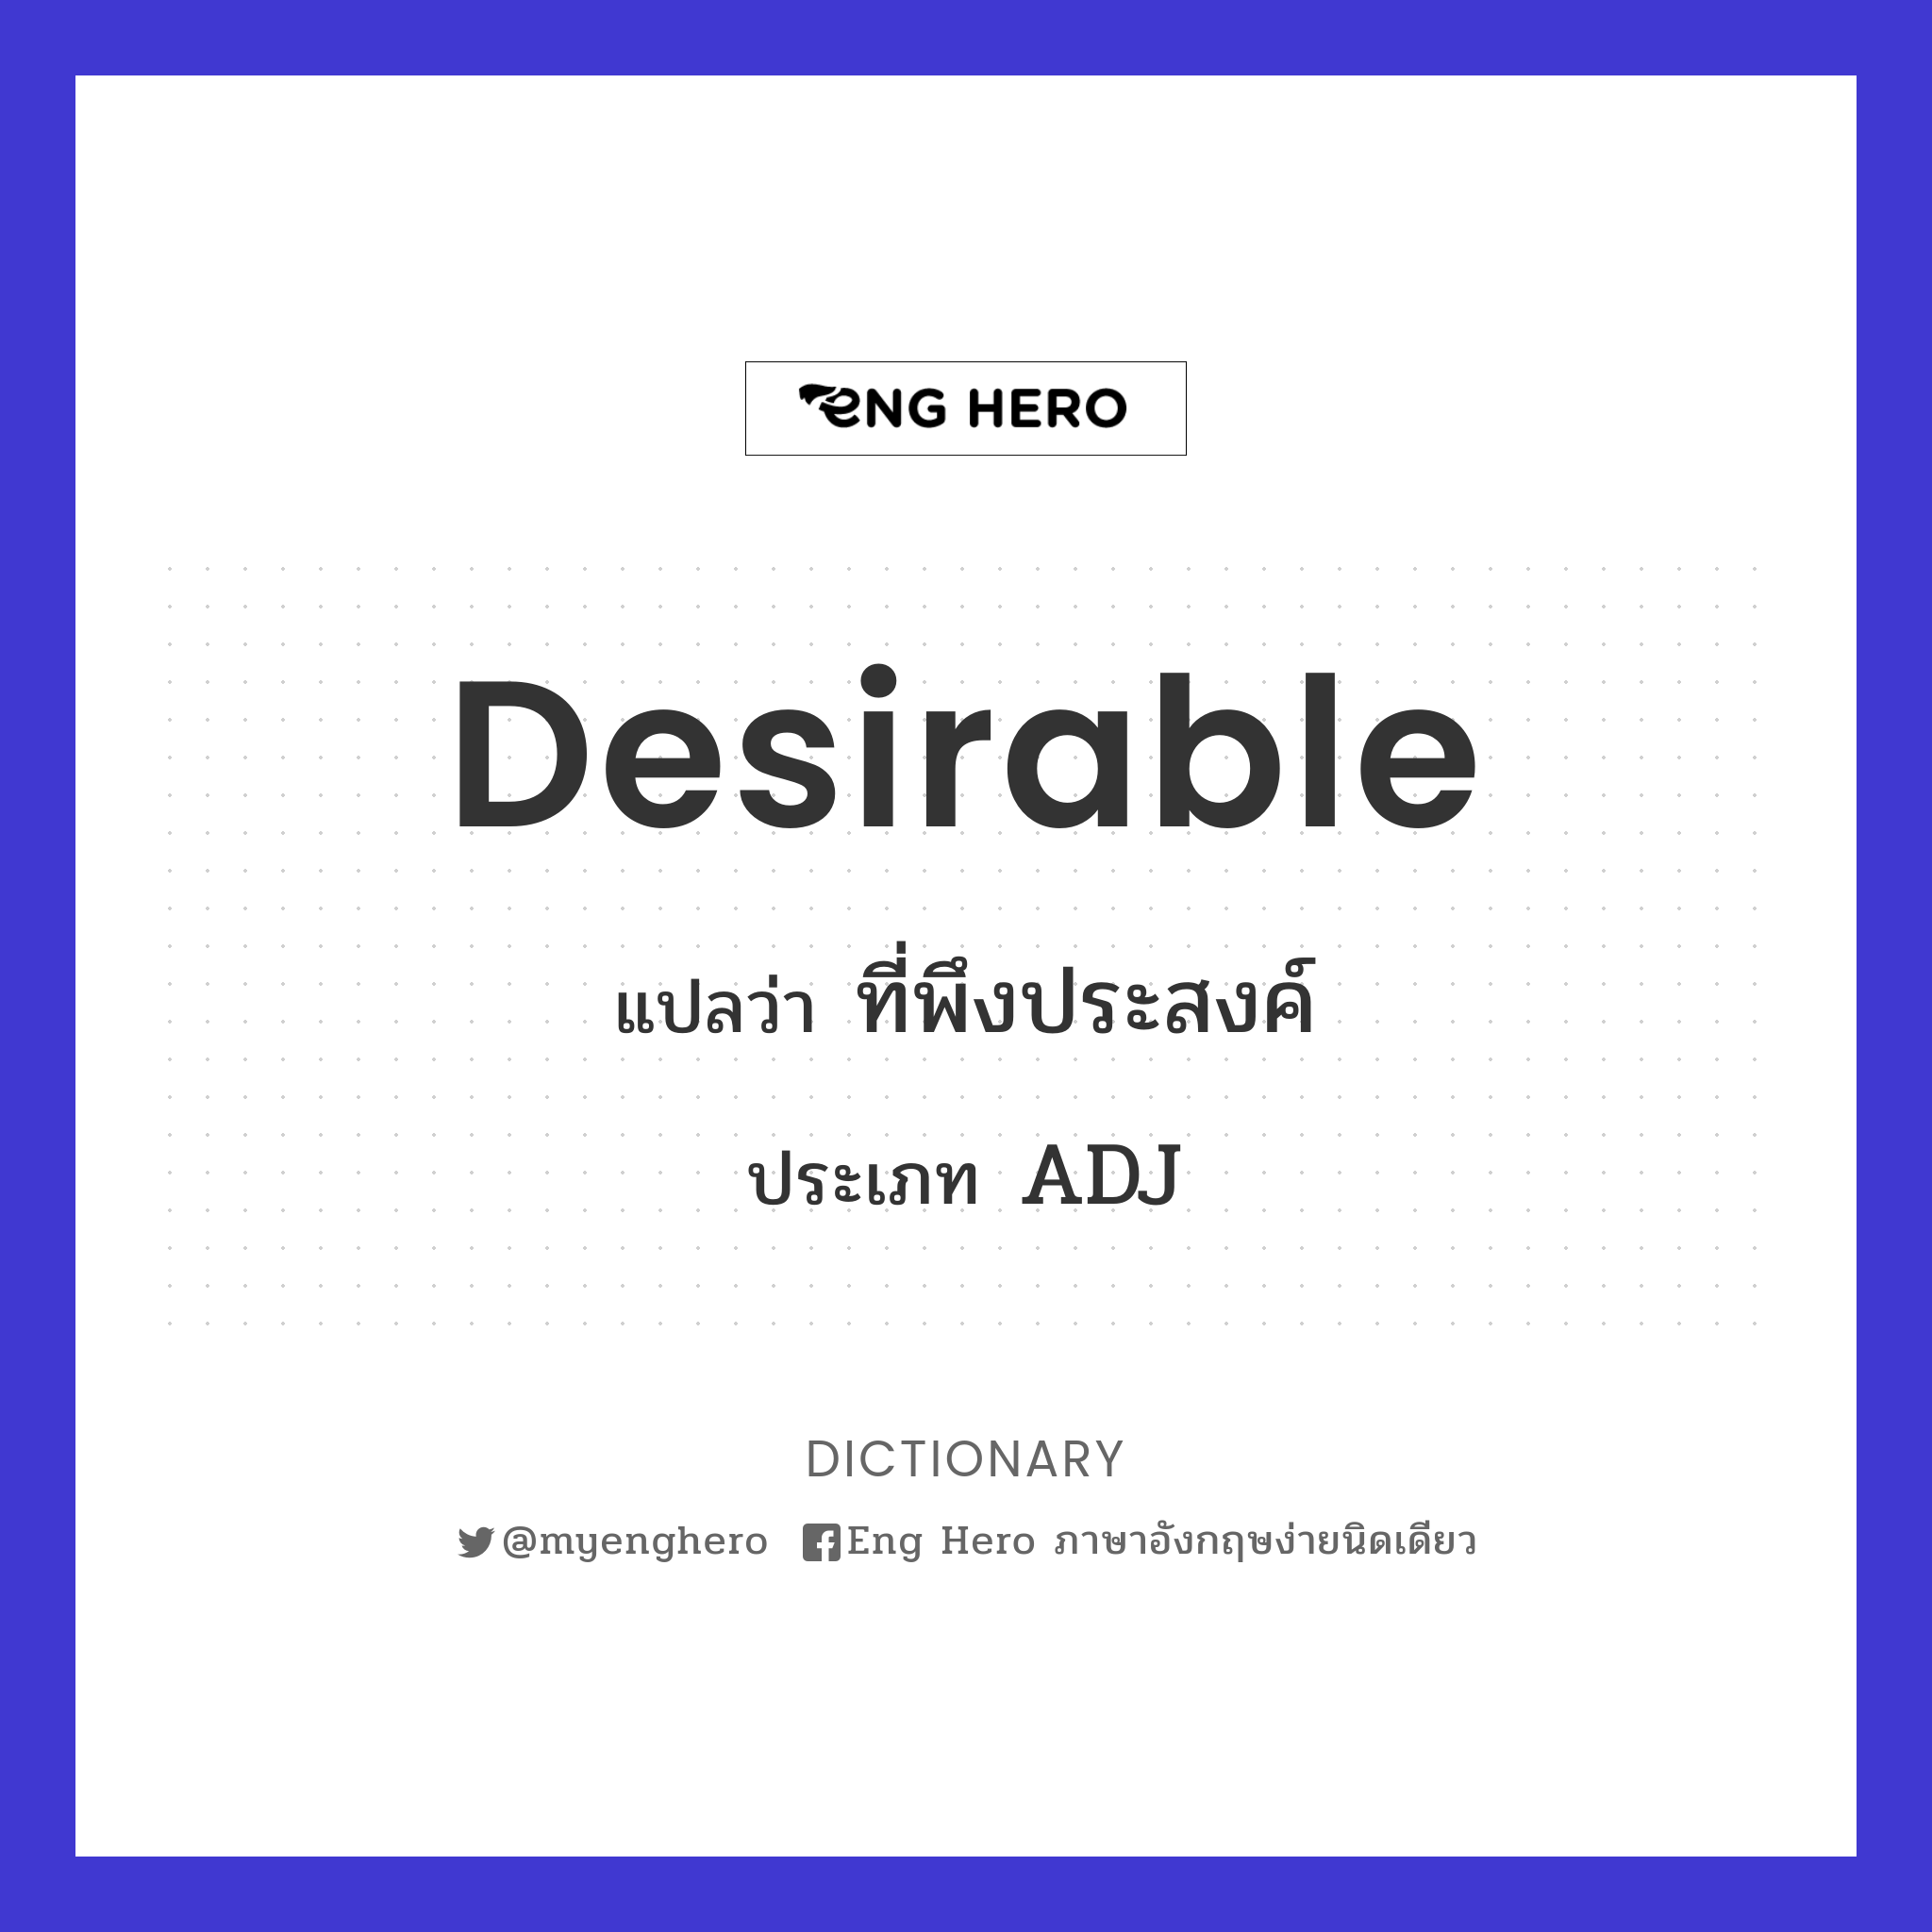 desirable